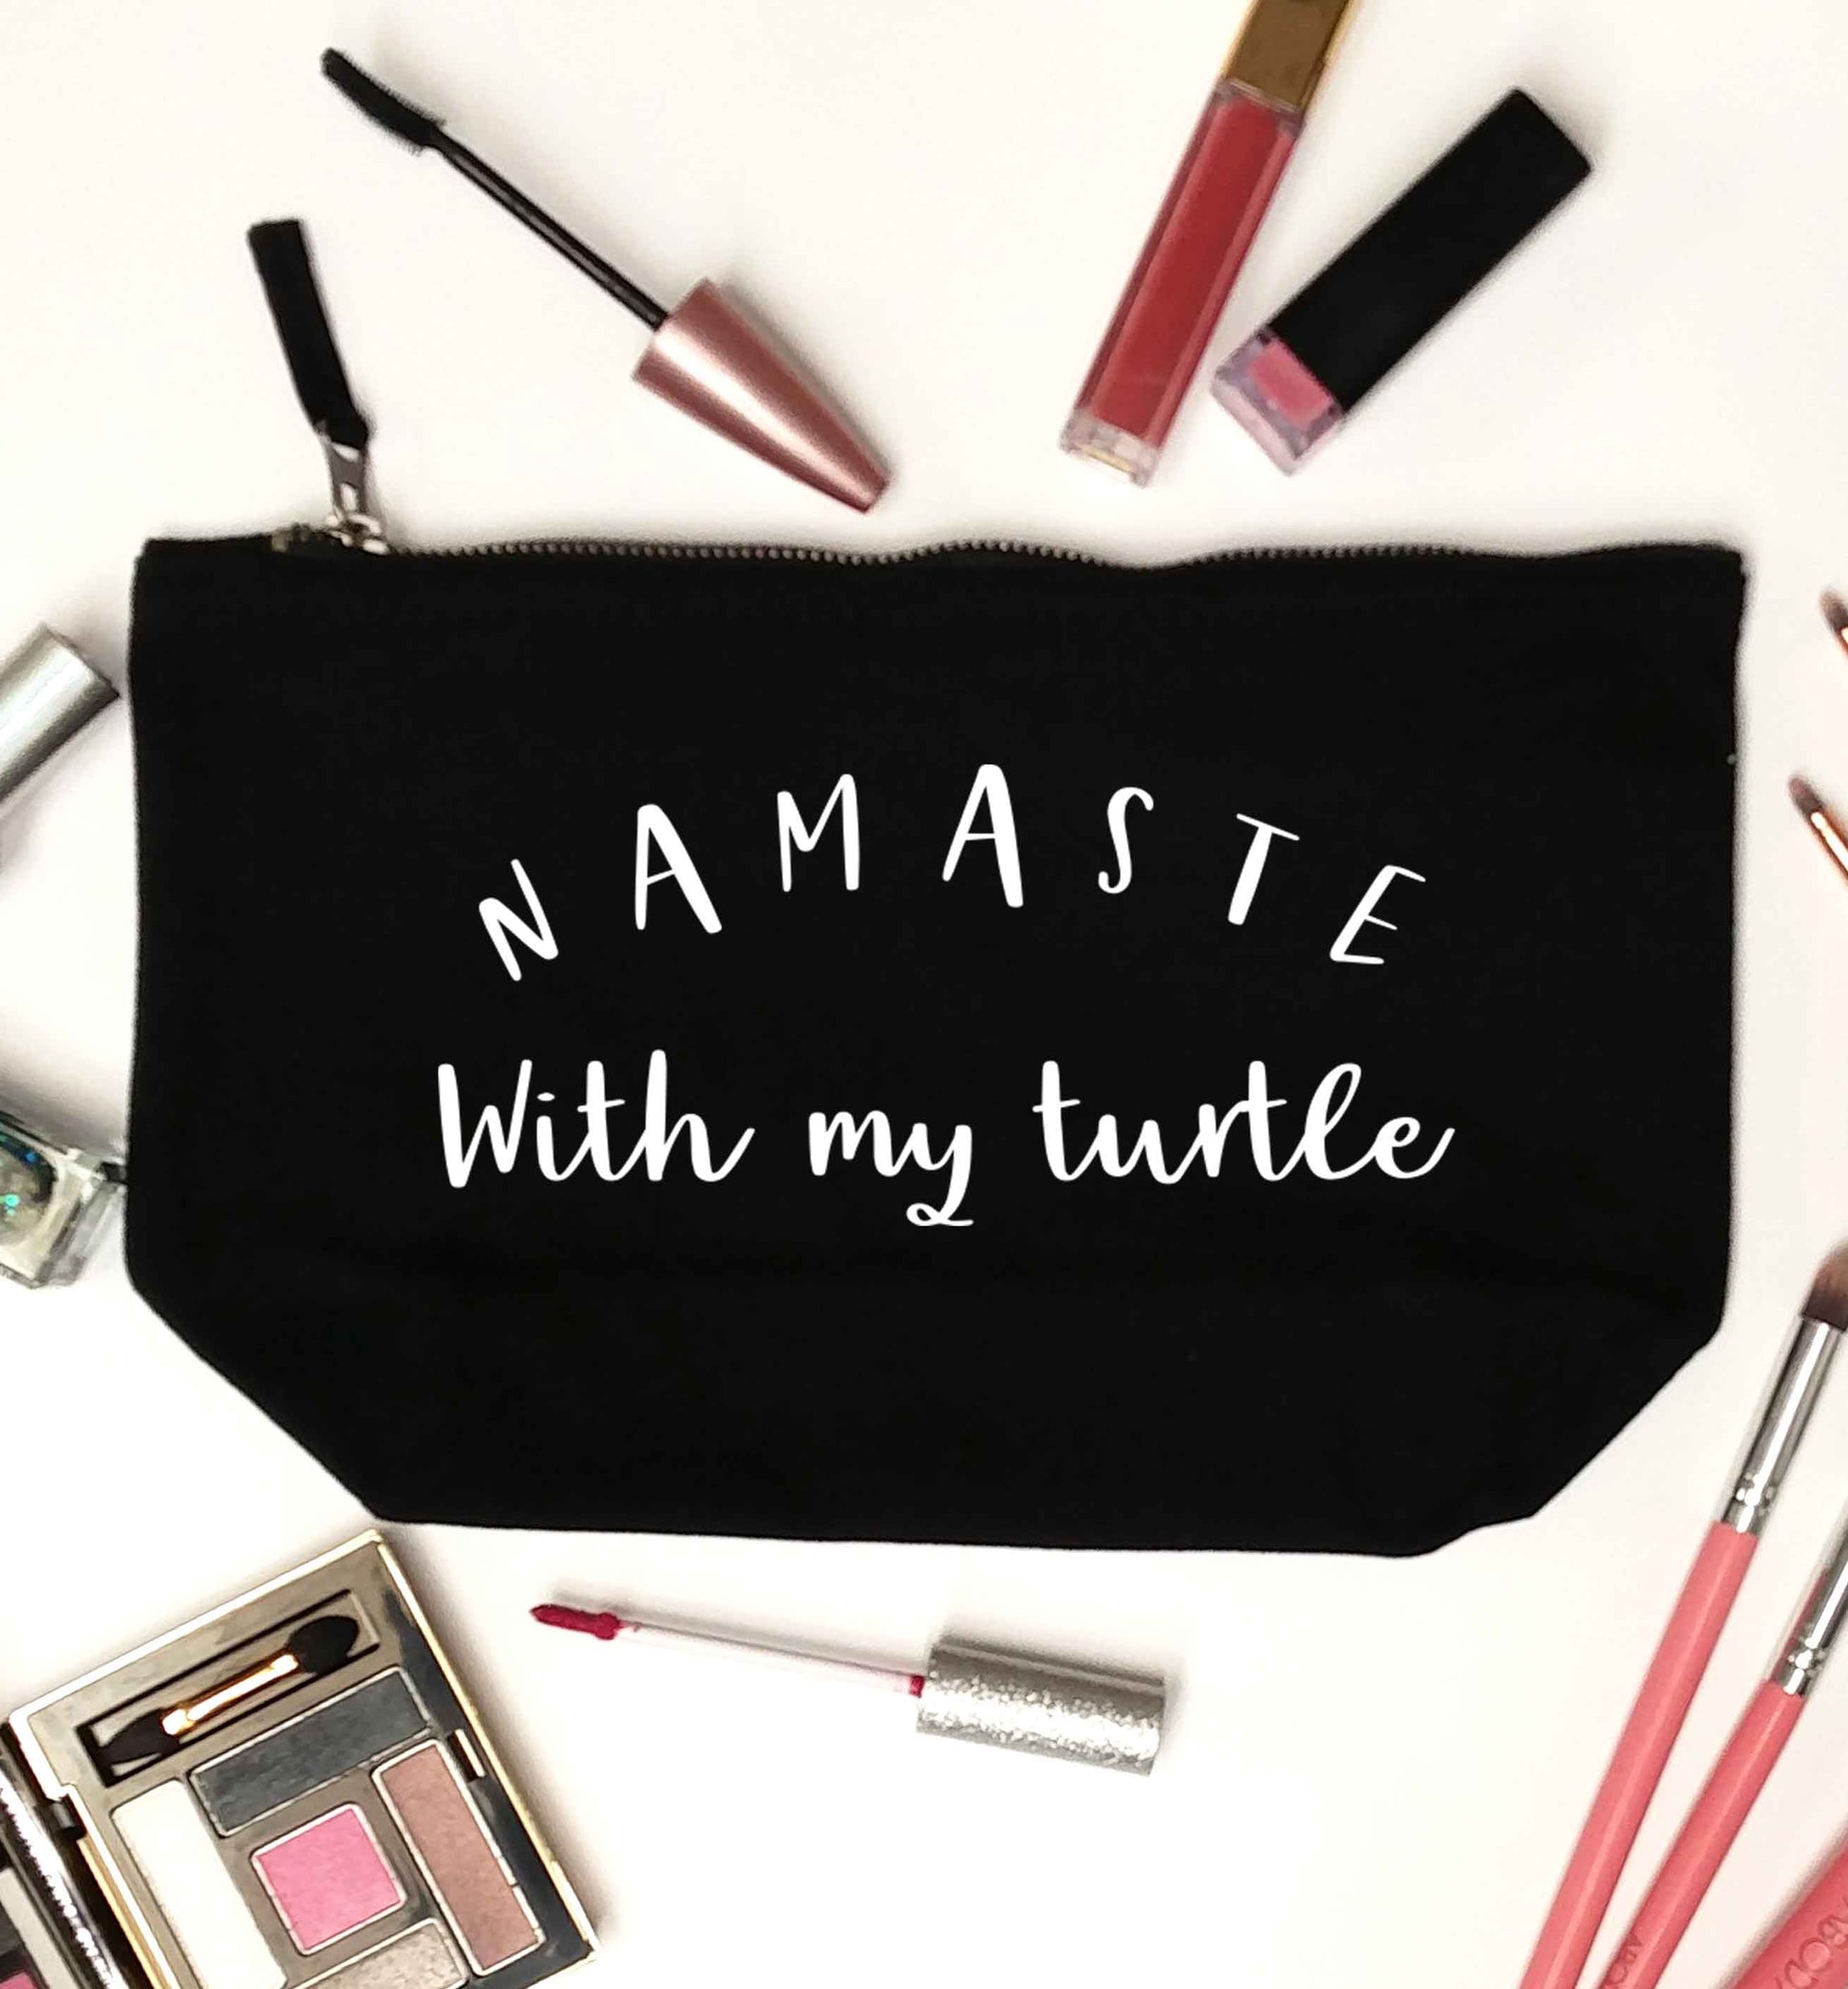 Namaste with my turtle black makeup bag